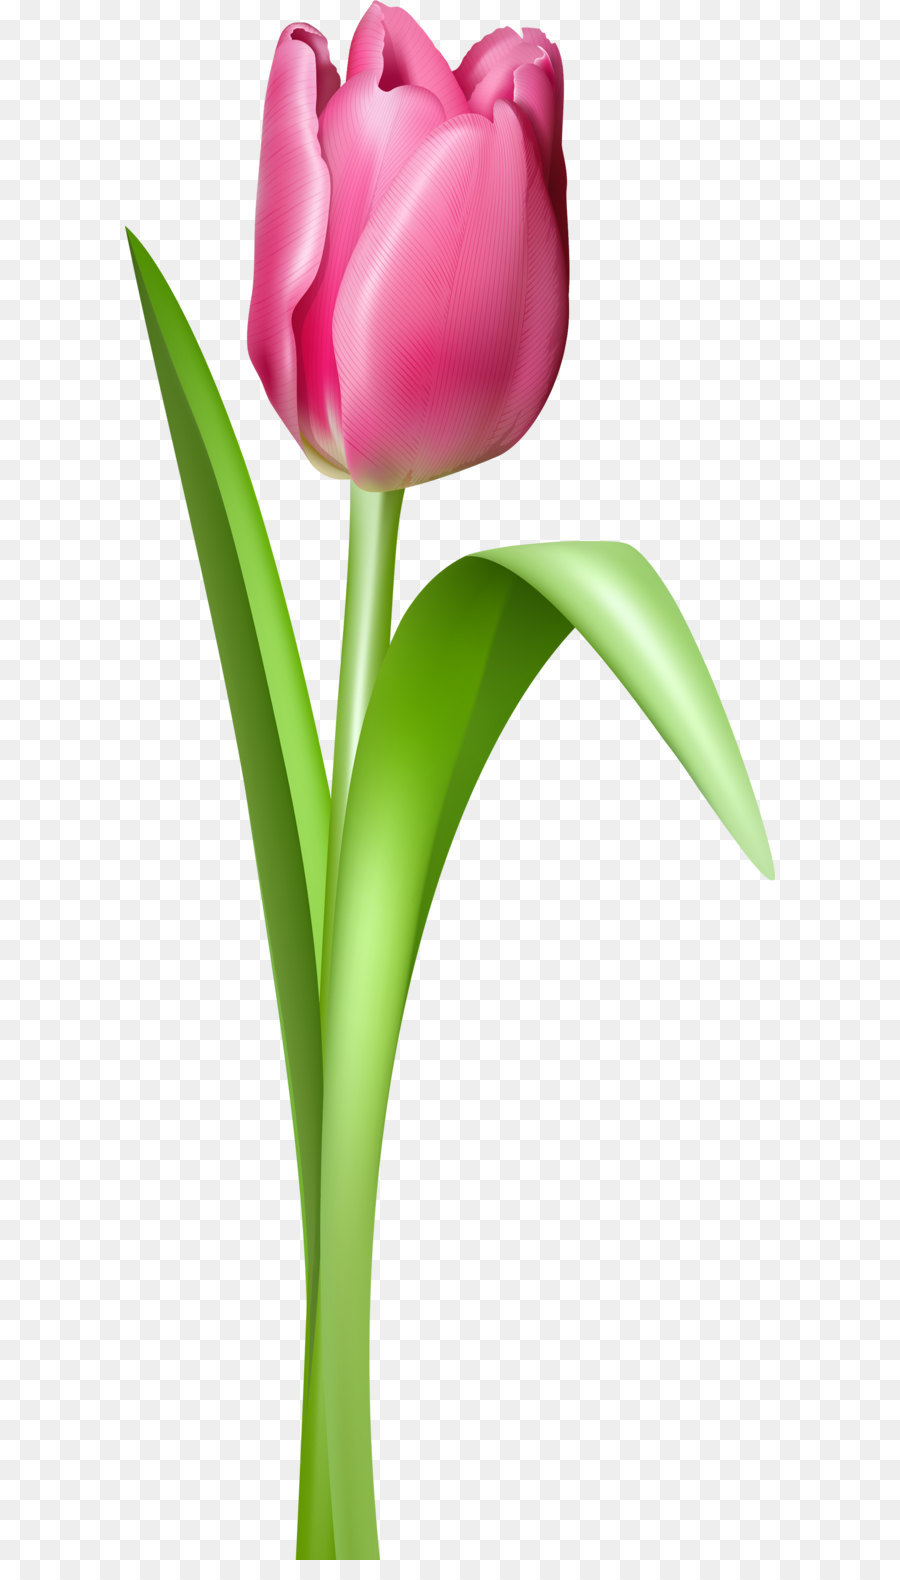 Tulip Clip art - Tulip PNG image png download - 1462*3509 - Free Transparent Tulip Mania png Download.